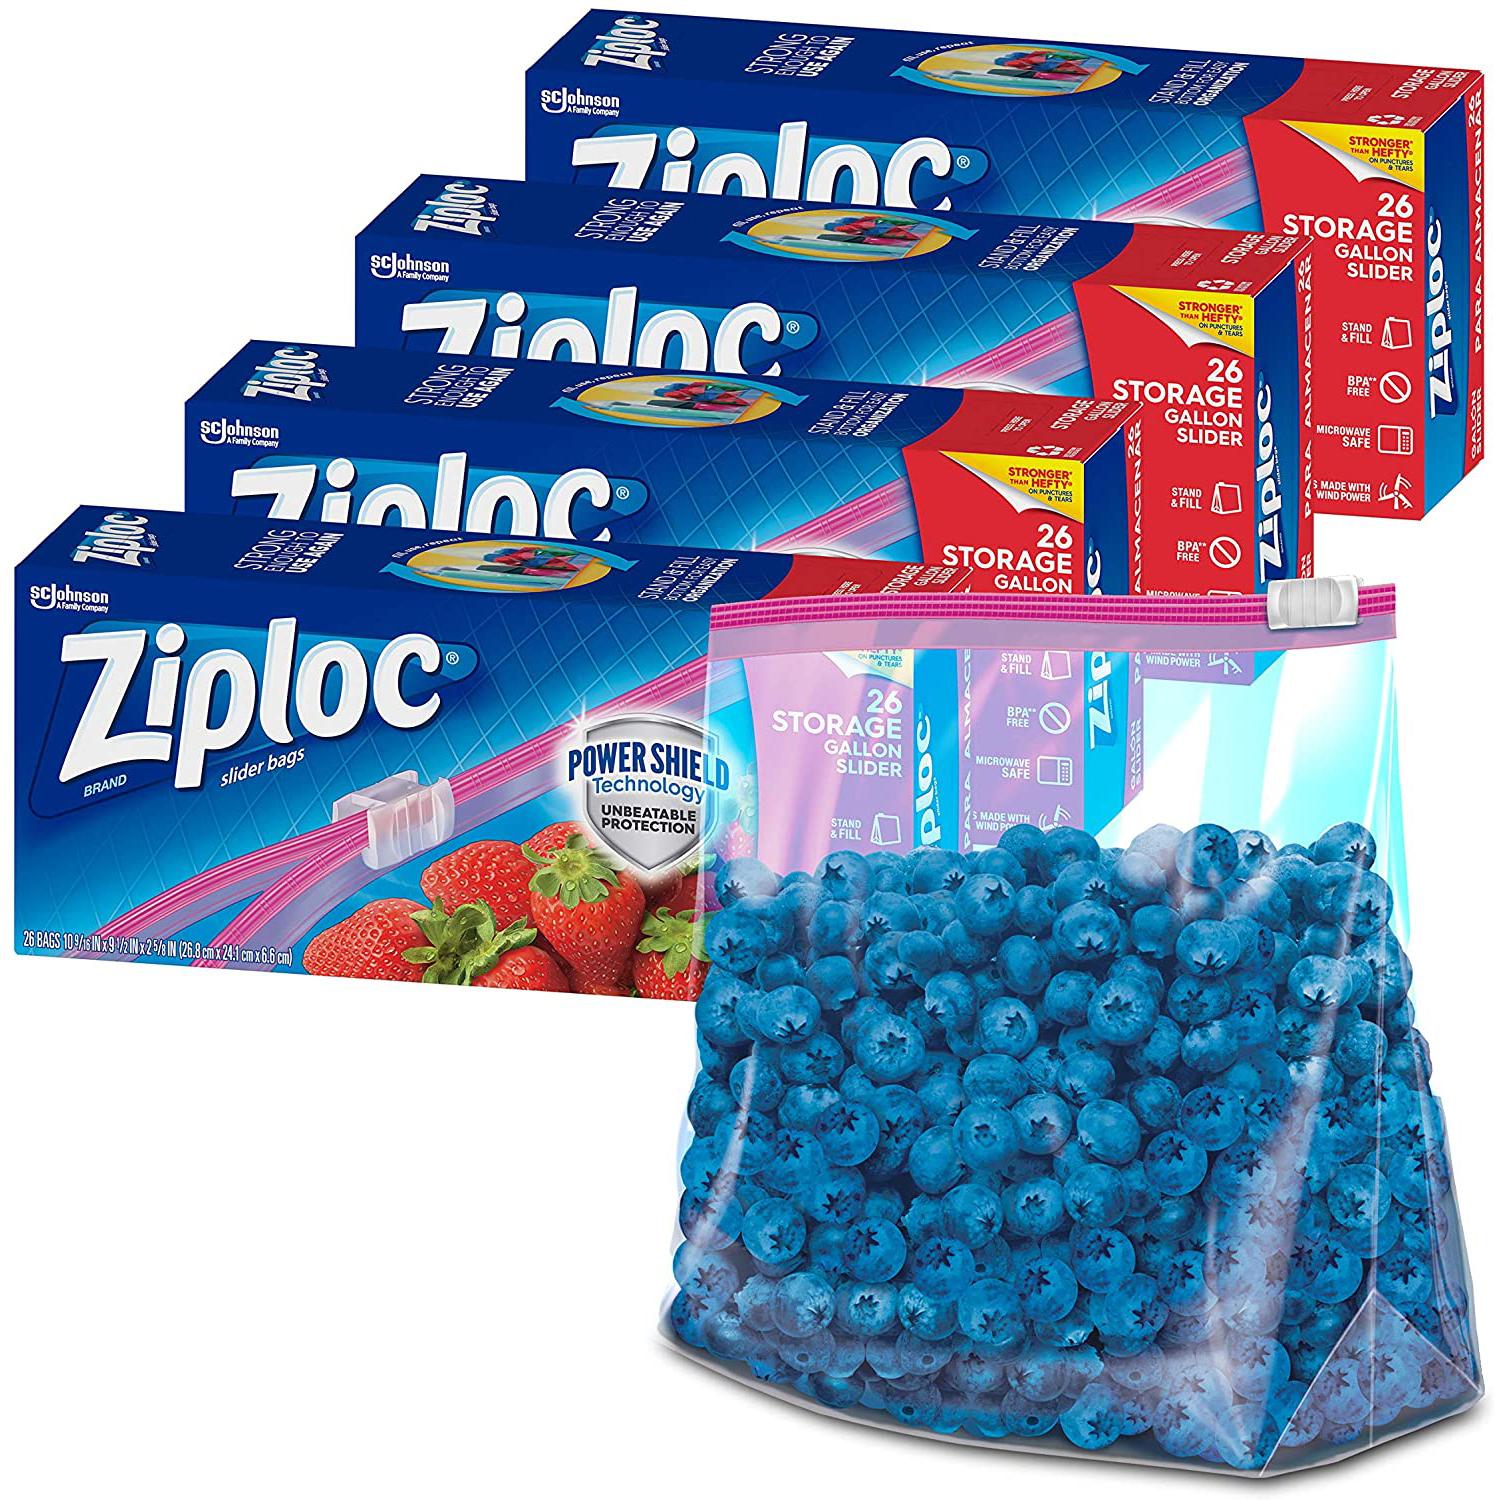 104 Ziploc Slider Storage Bags for $10.67 Shipped